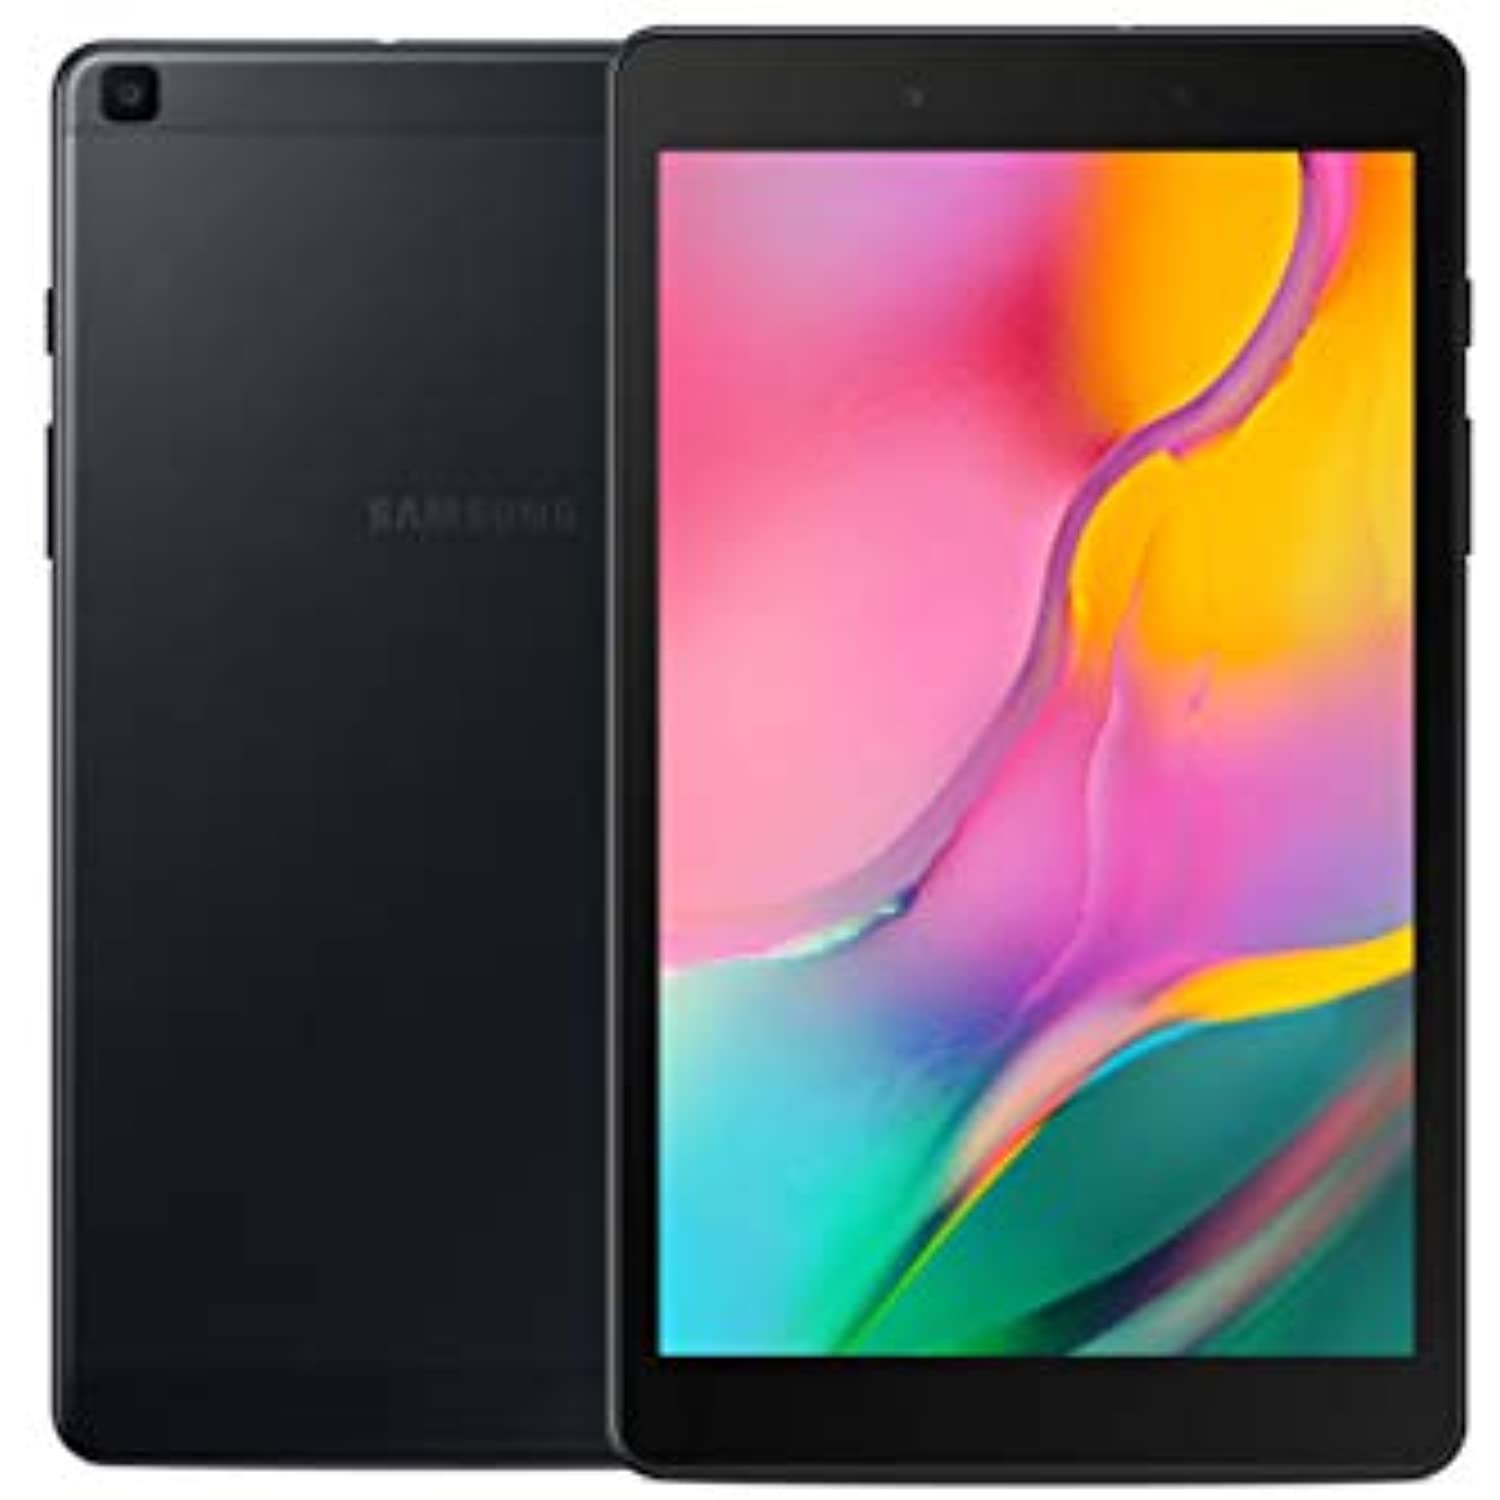 Galaxy 8 Inch Tablet A- SAMSUNG -32 GB WIFI Android 9.0 Pie Tablet 2019 Black - A Horizon Dawn